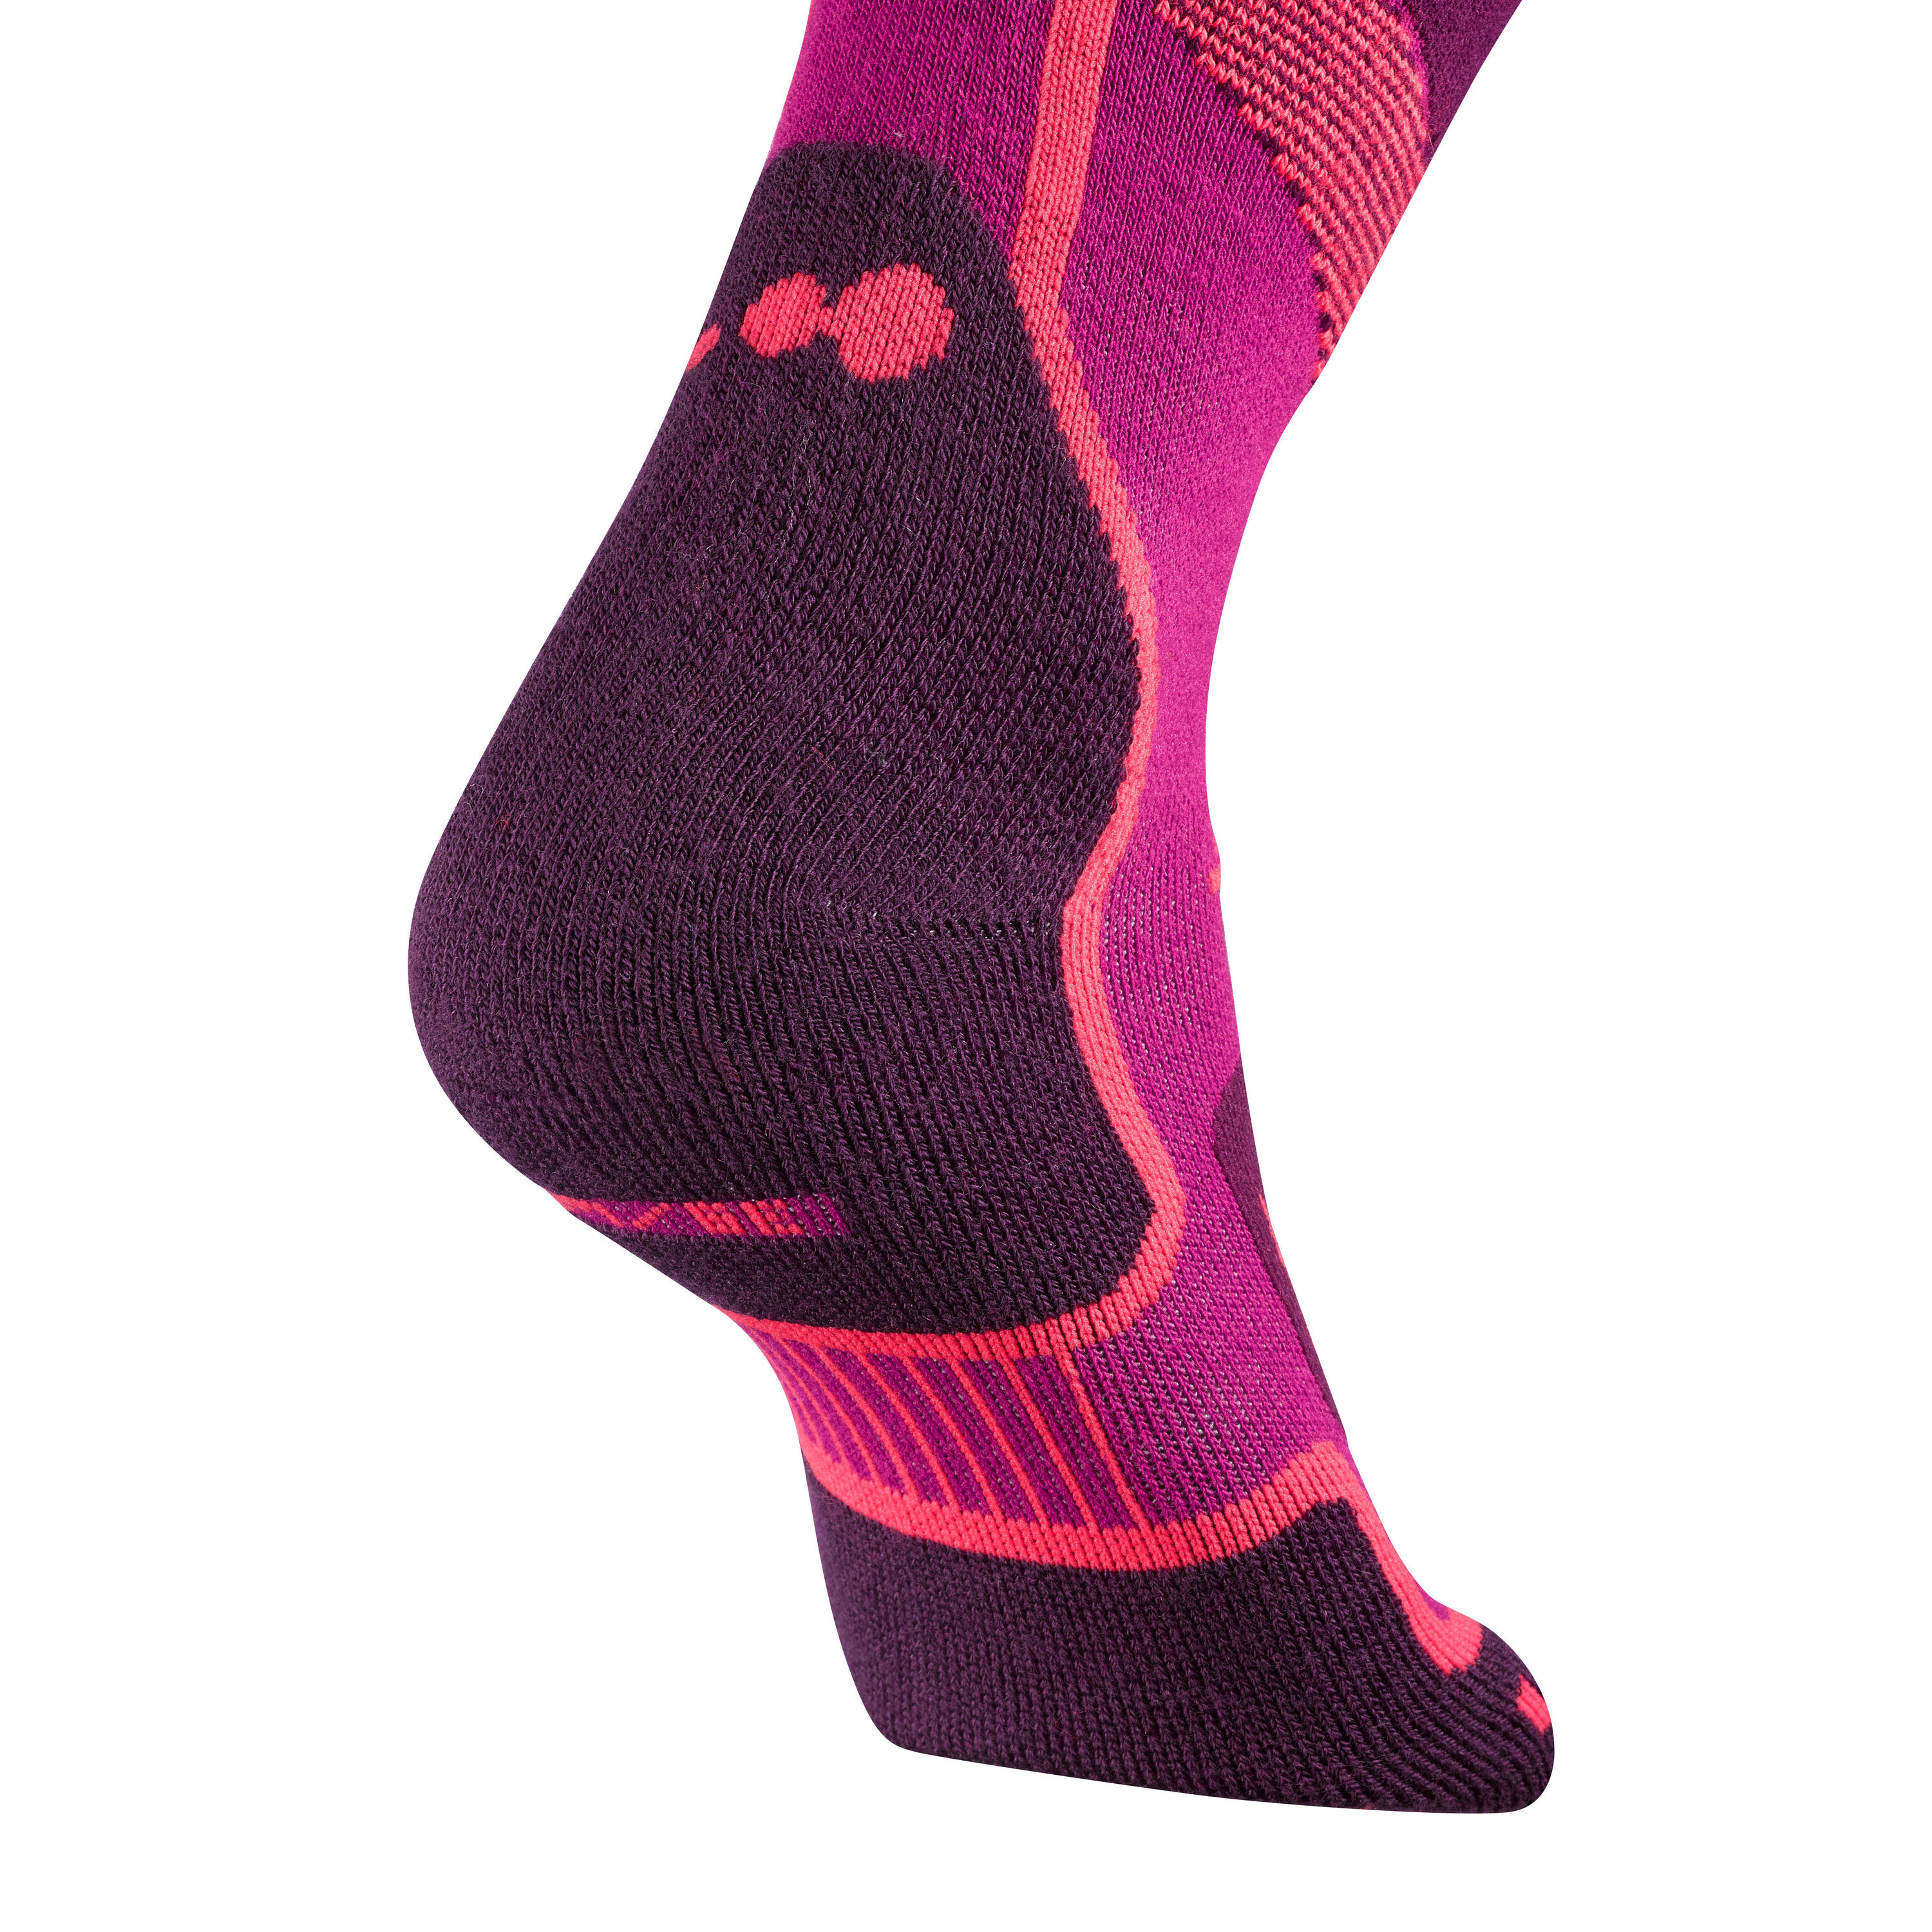 300 Adult Ski Socks - Pink 5/5